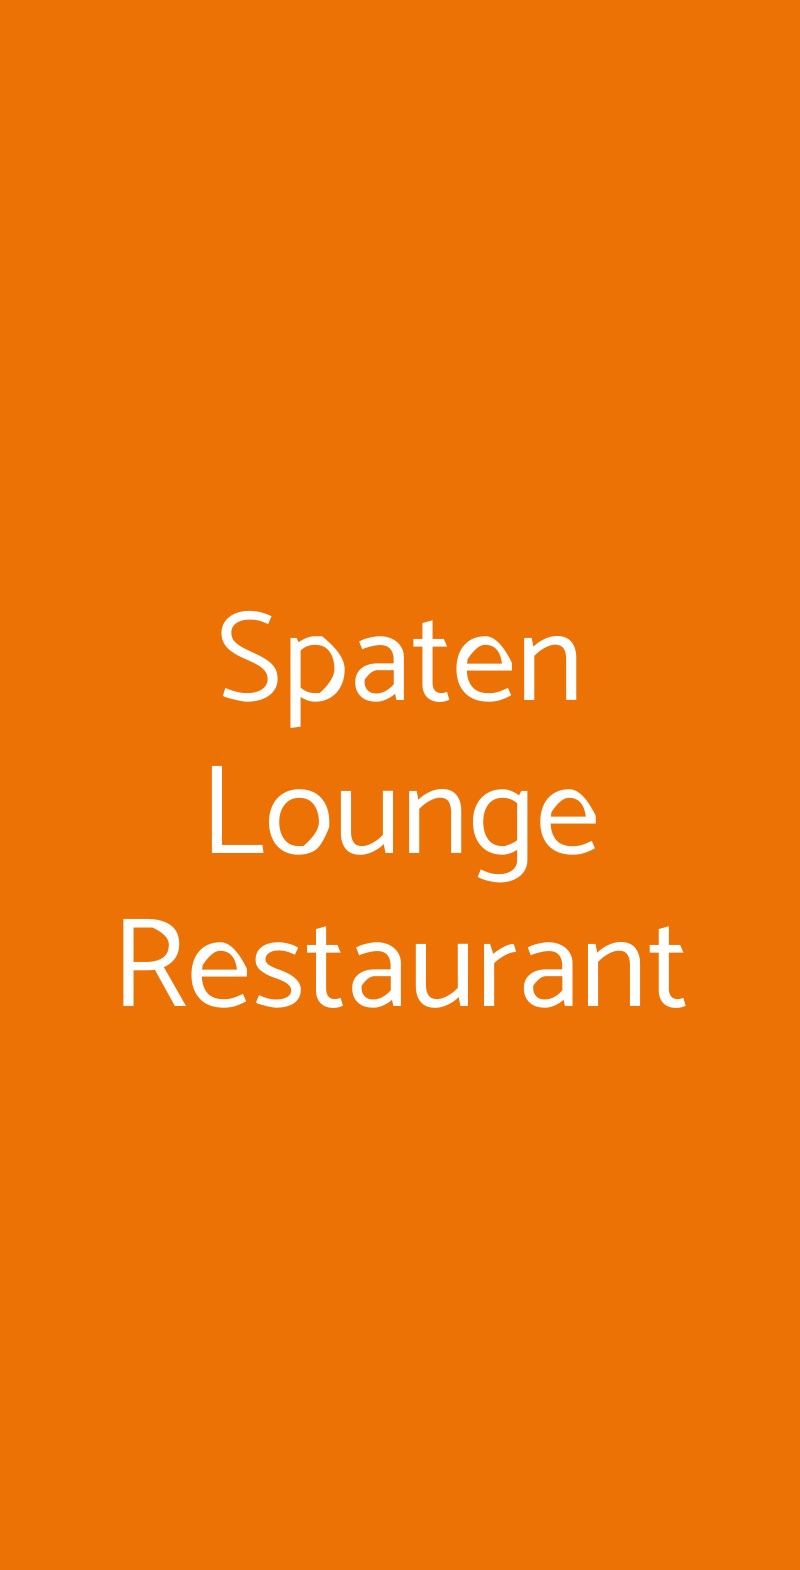 Spaten Lounge Restaurant Roma menù 1 pagina